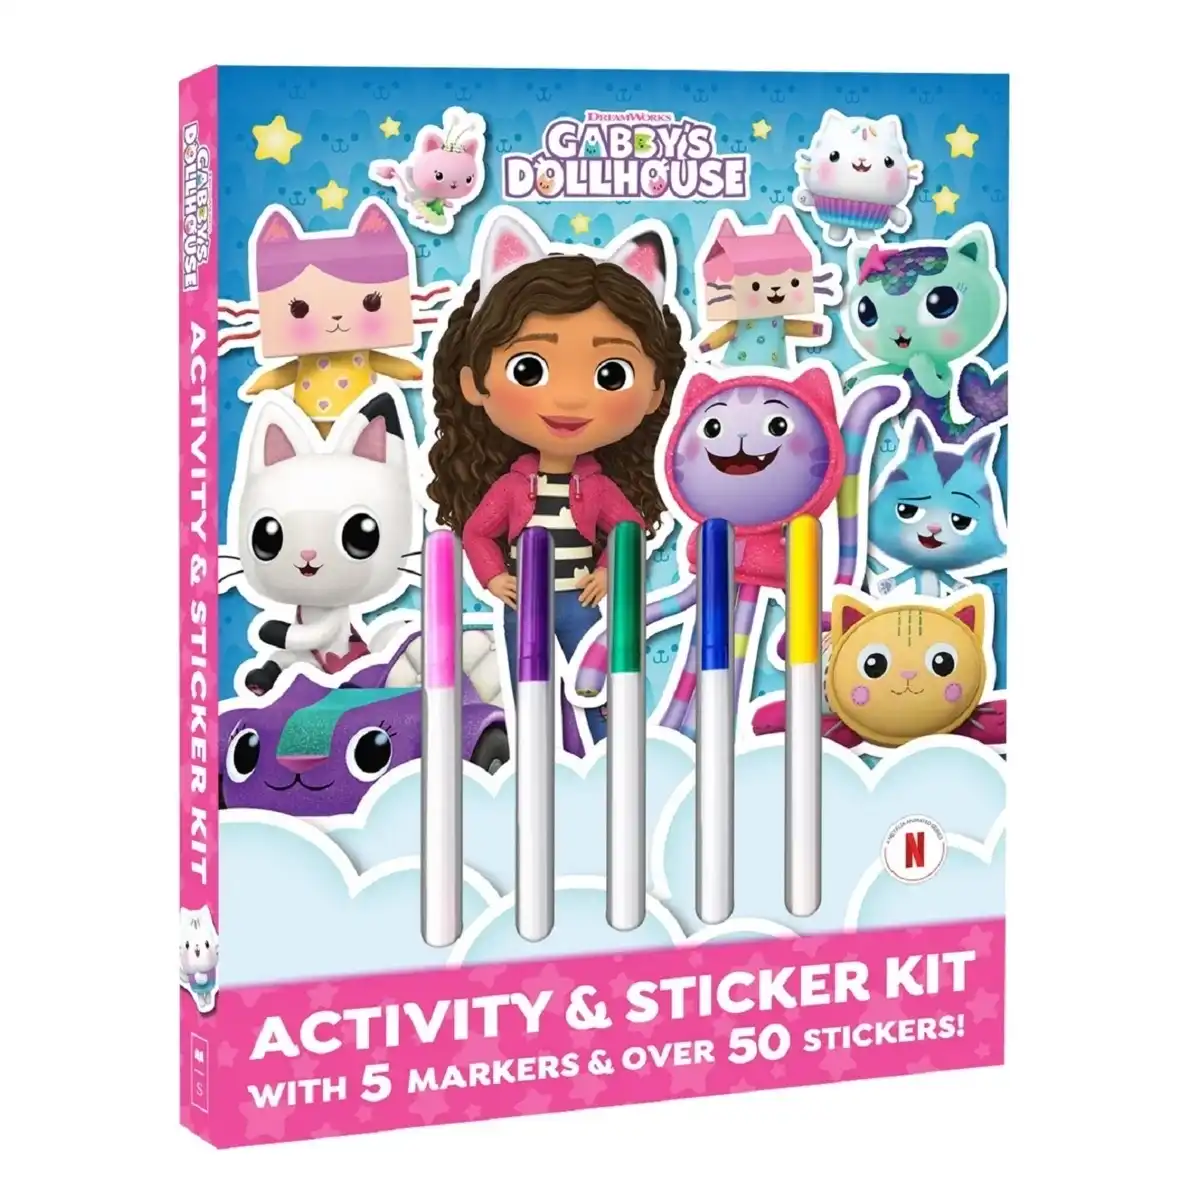 Gabby's Dollhouse Activity & Sticker Kit